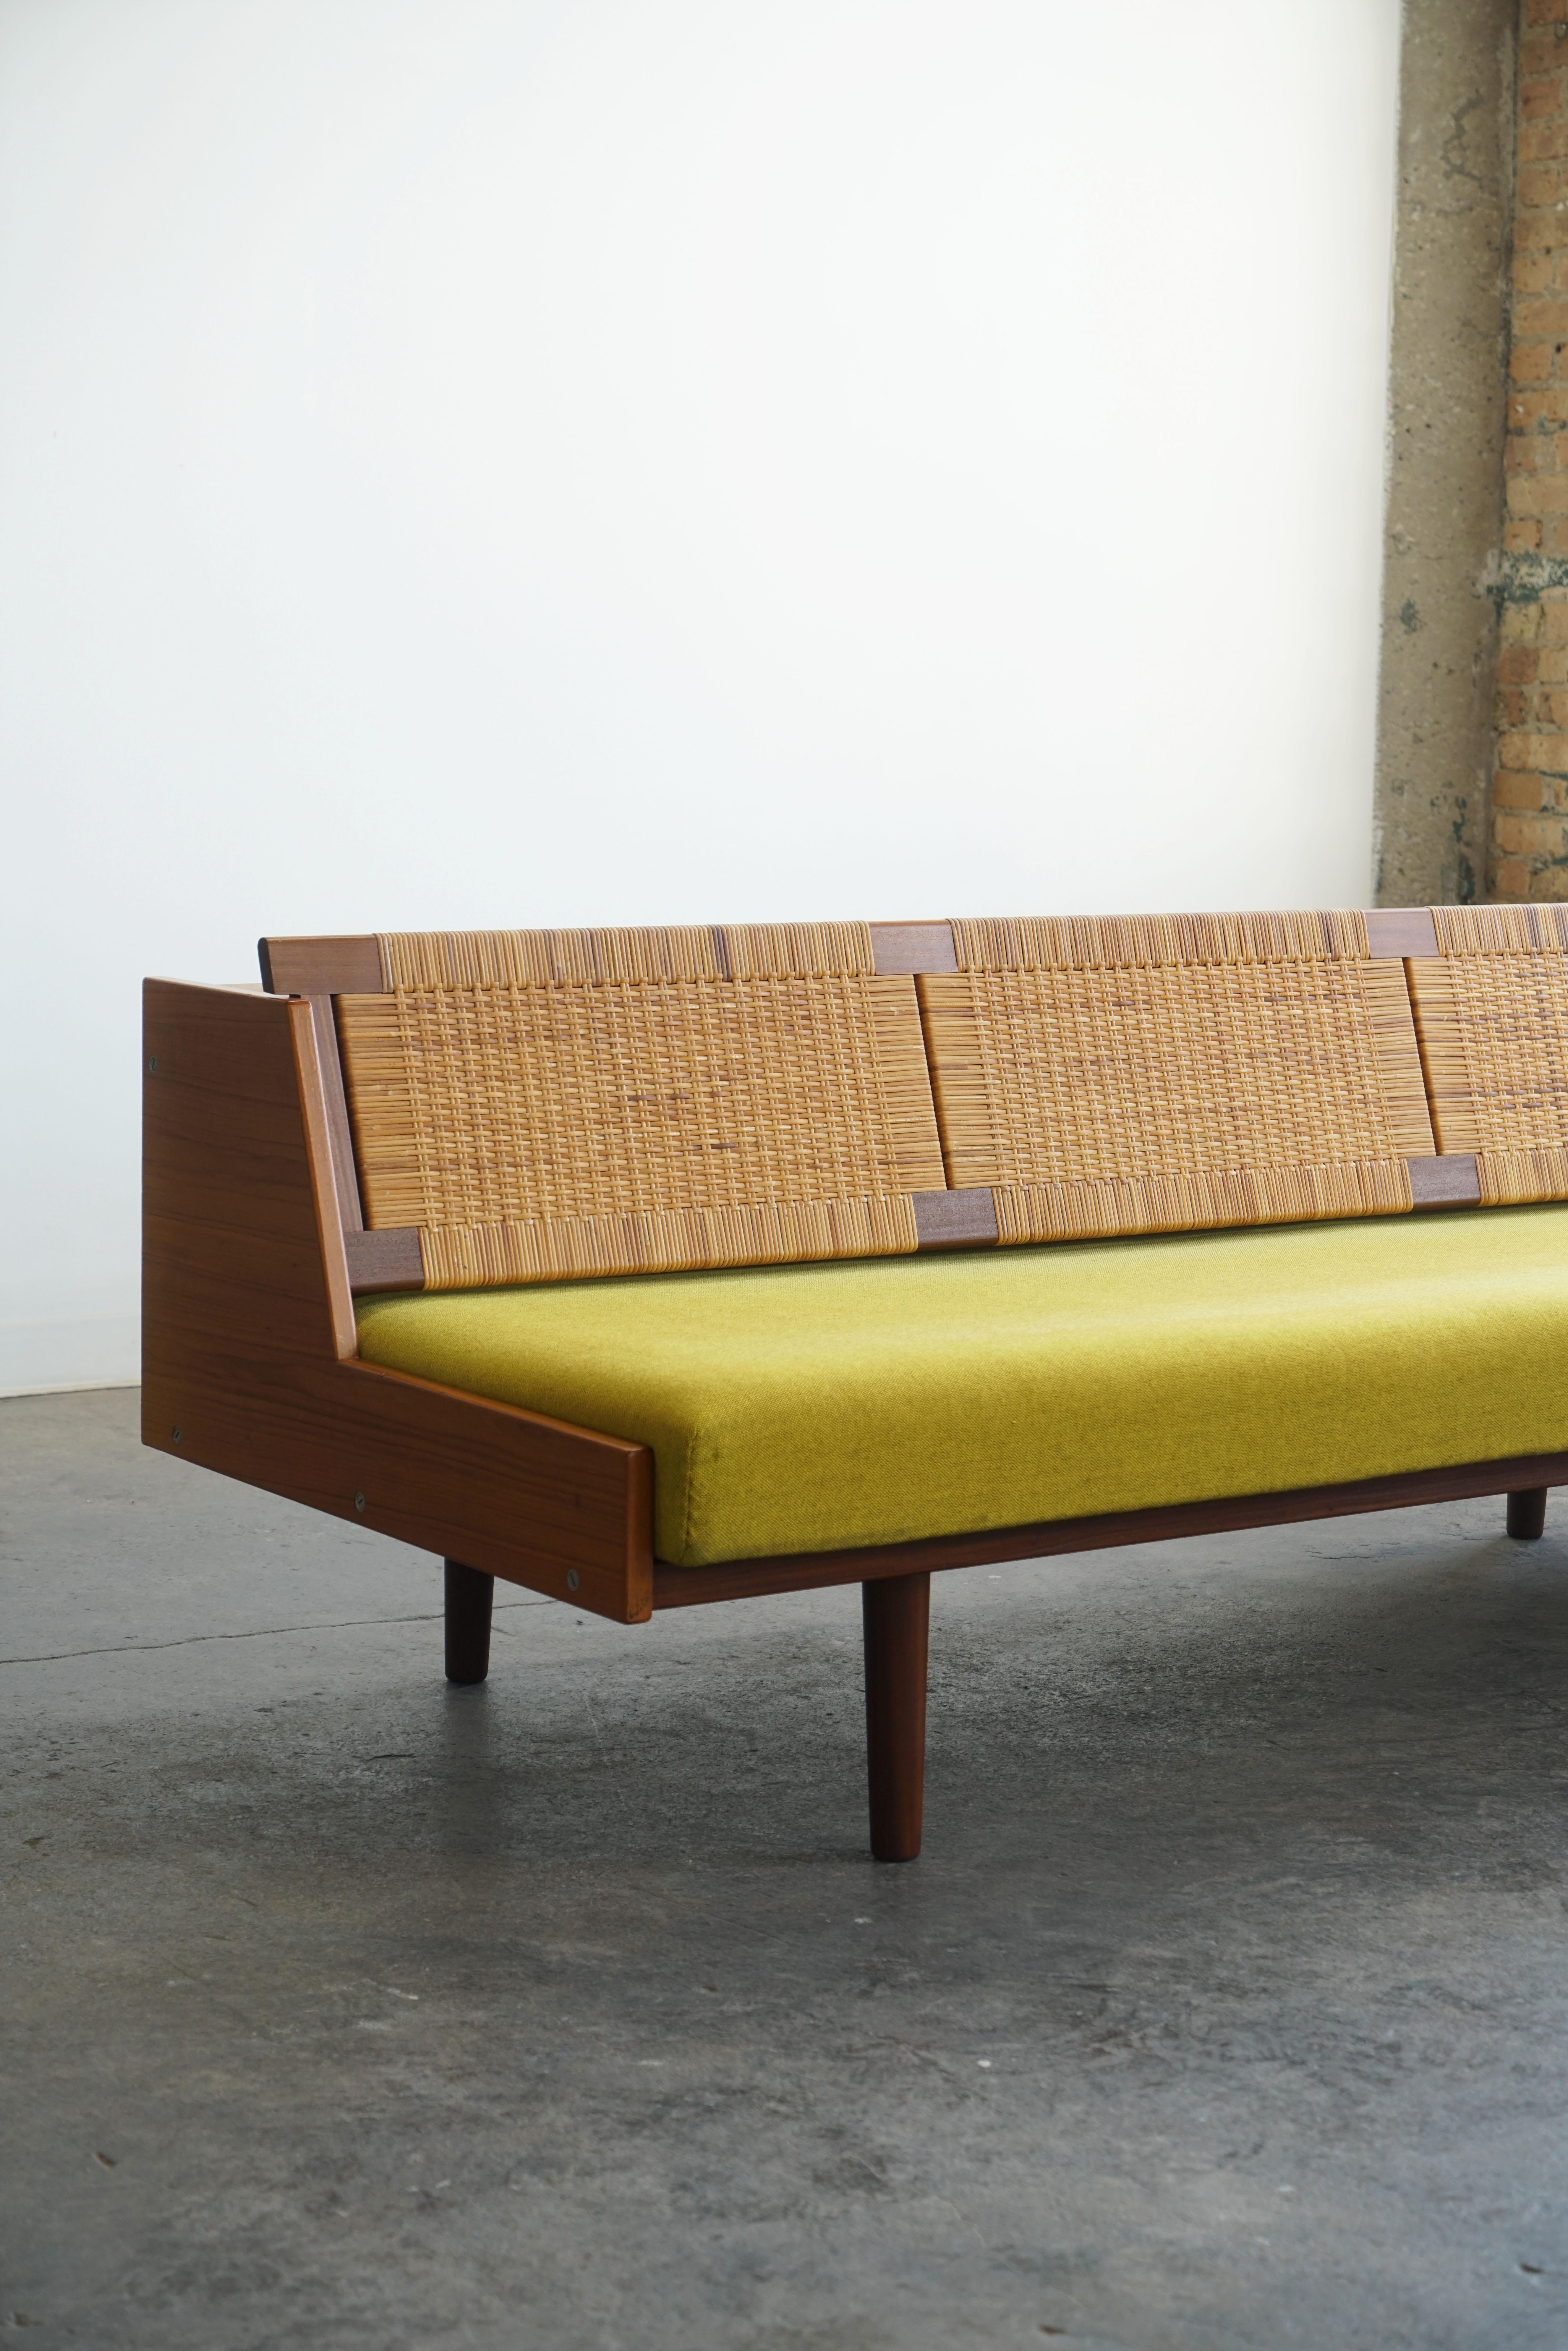 Mid-Century Modern Hans Wegner Sofa Daybed Model GE7 in Teak and Cane 1960's for Getama For Sale